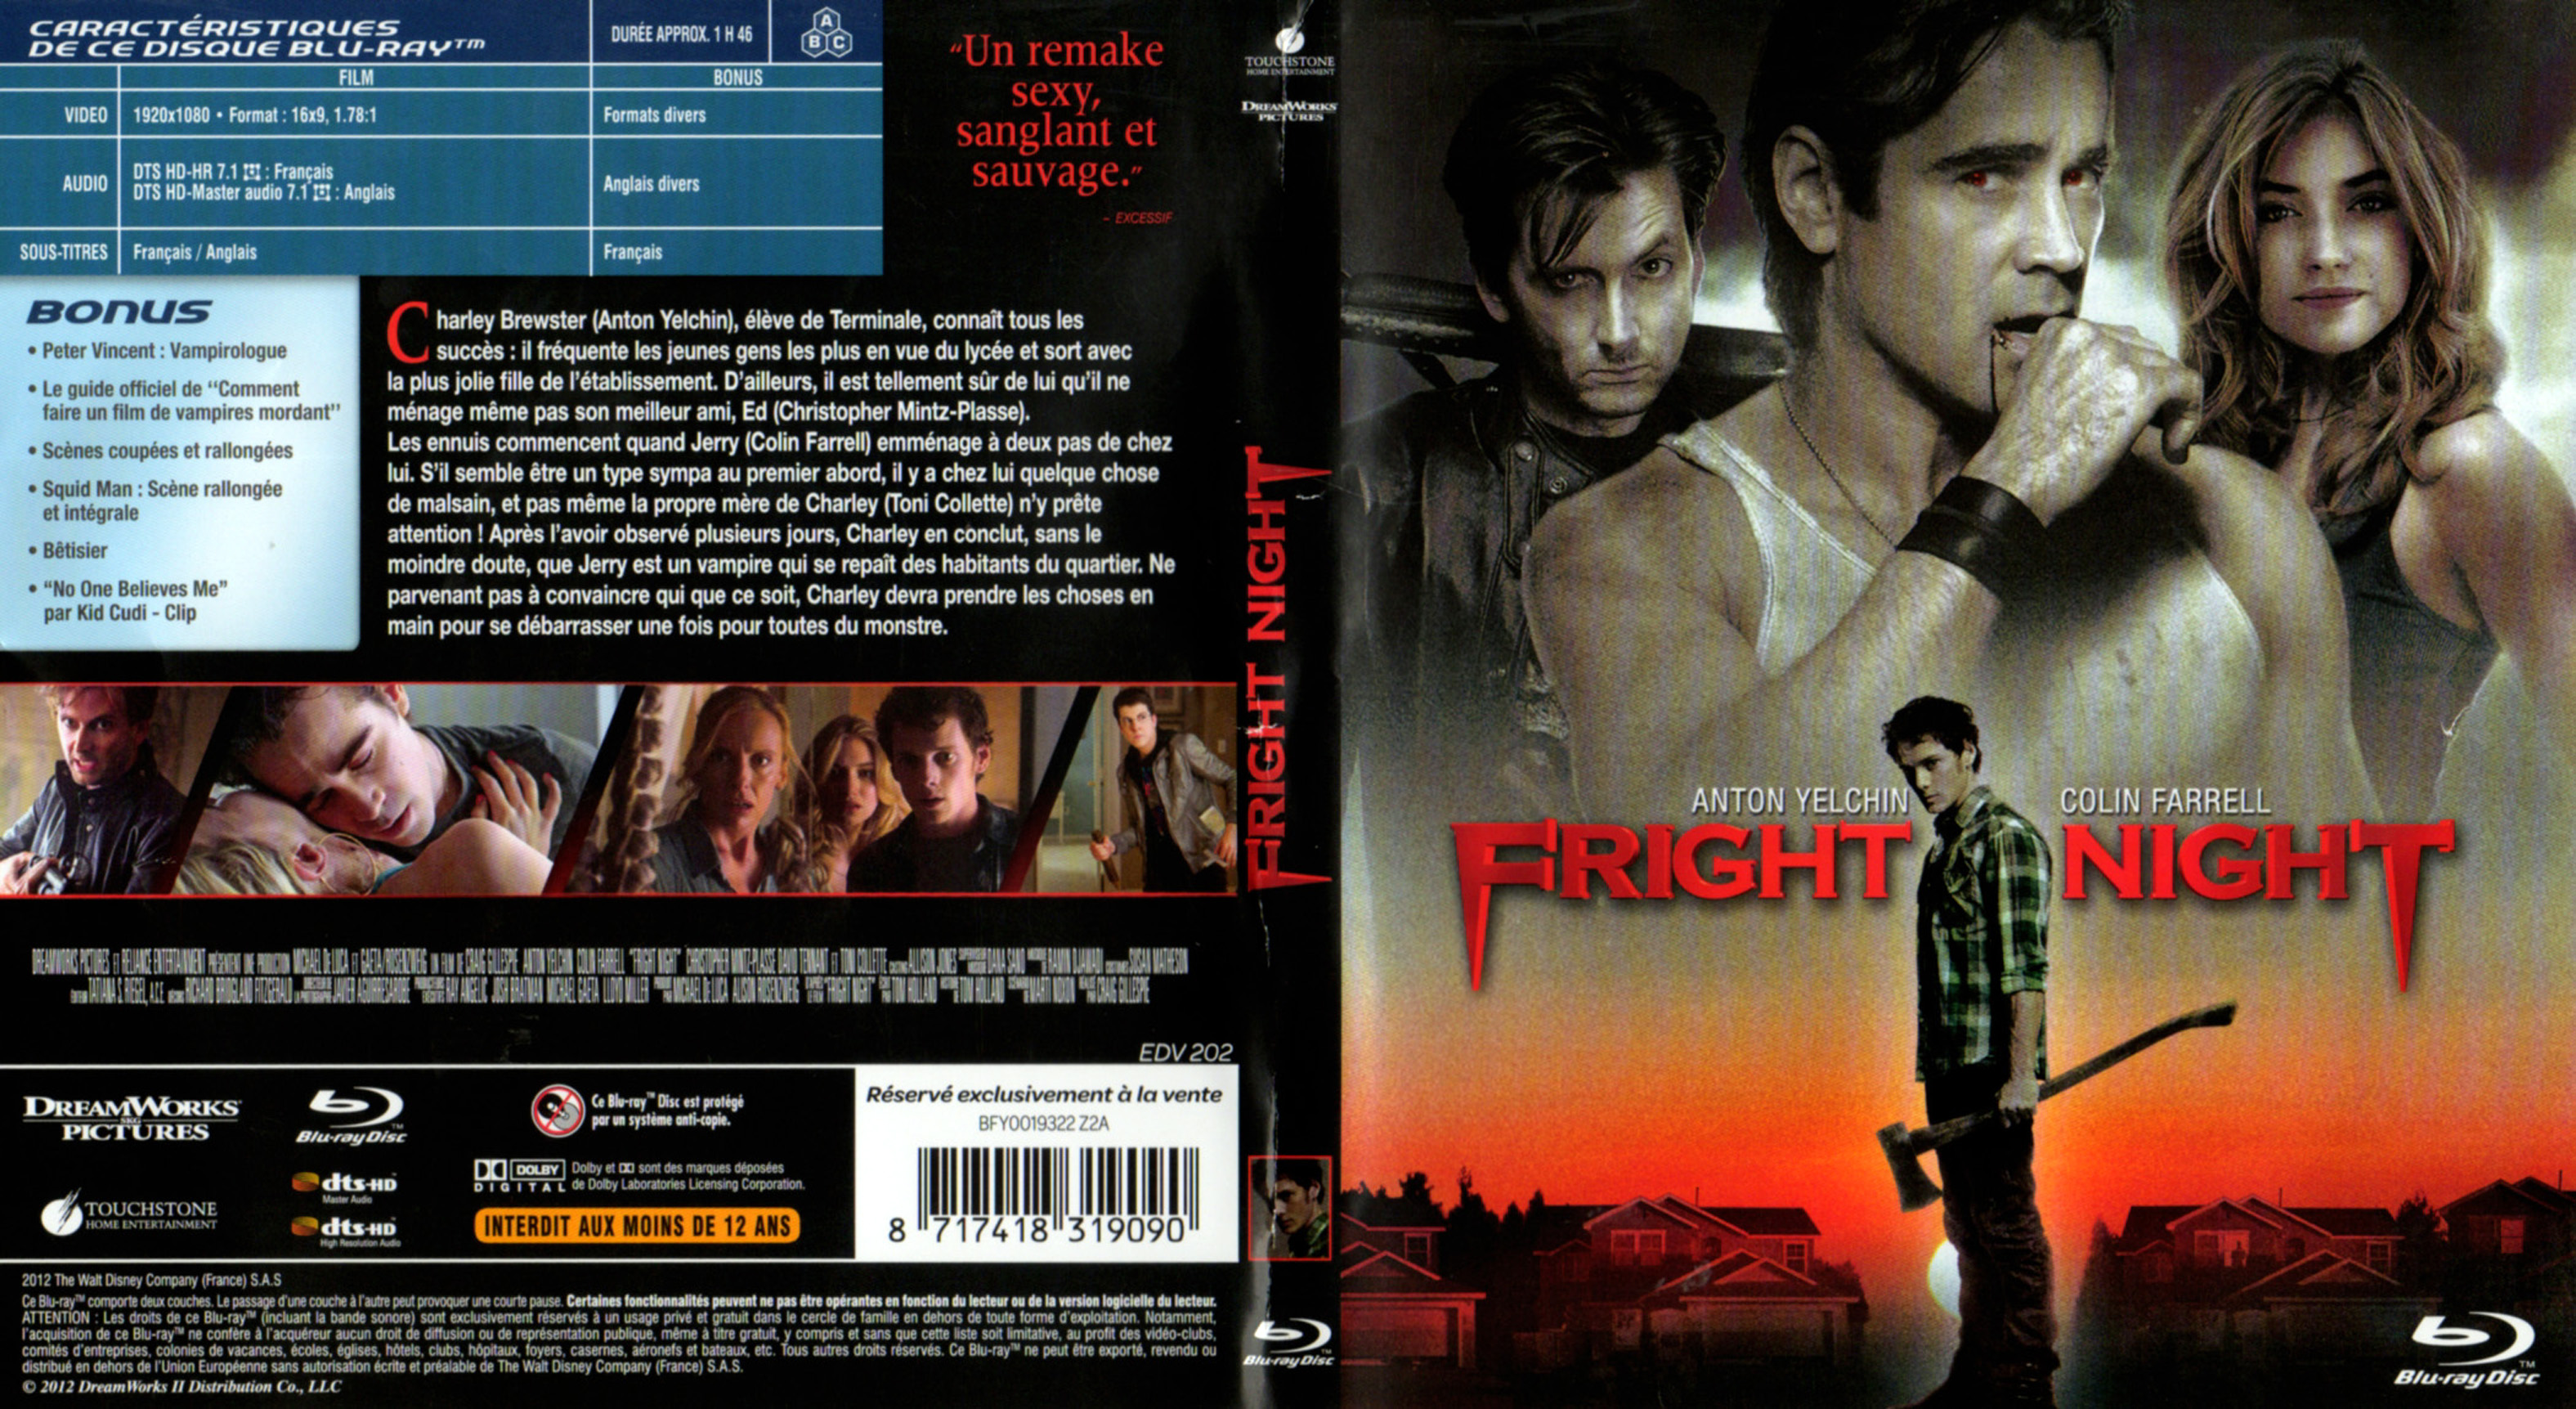 Jaquette DVD Fright Night (BLU-RAY) v2